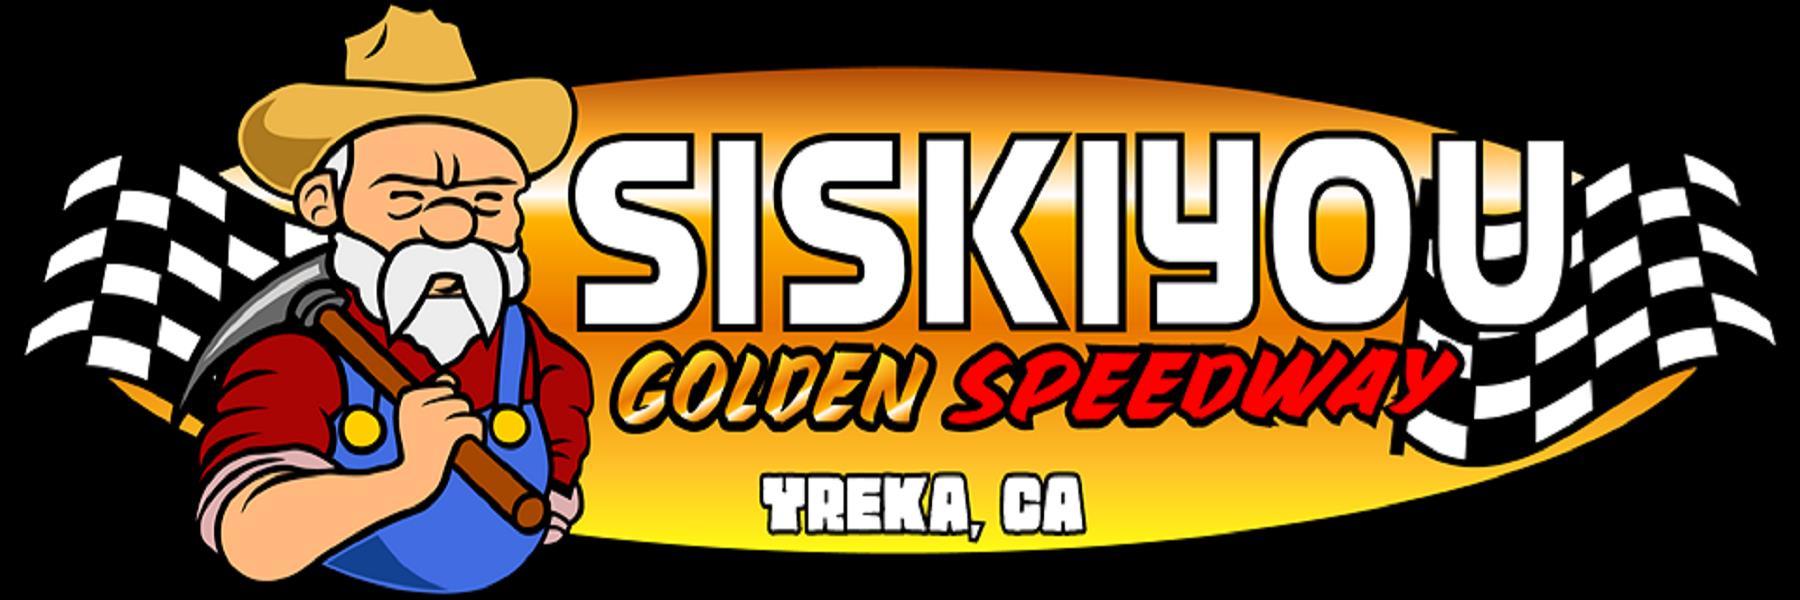 7/1/2022 - Siskiyou Golden Speedway